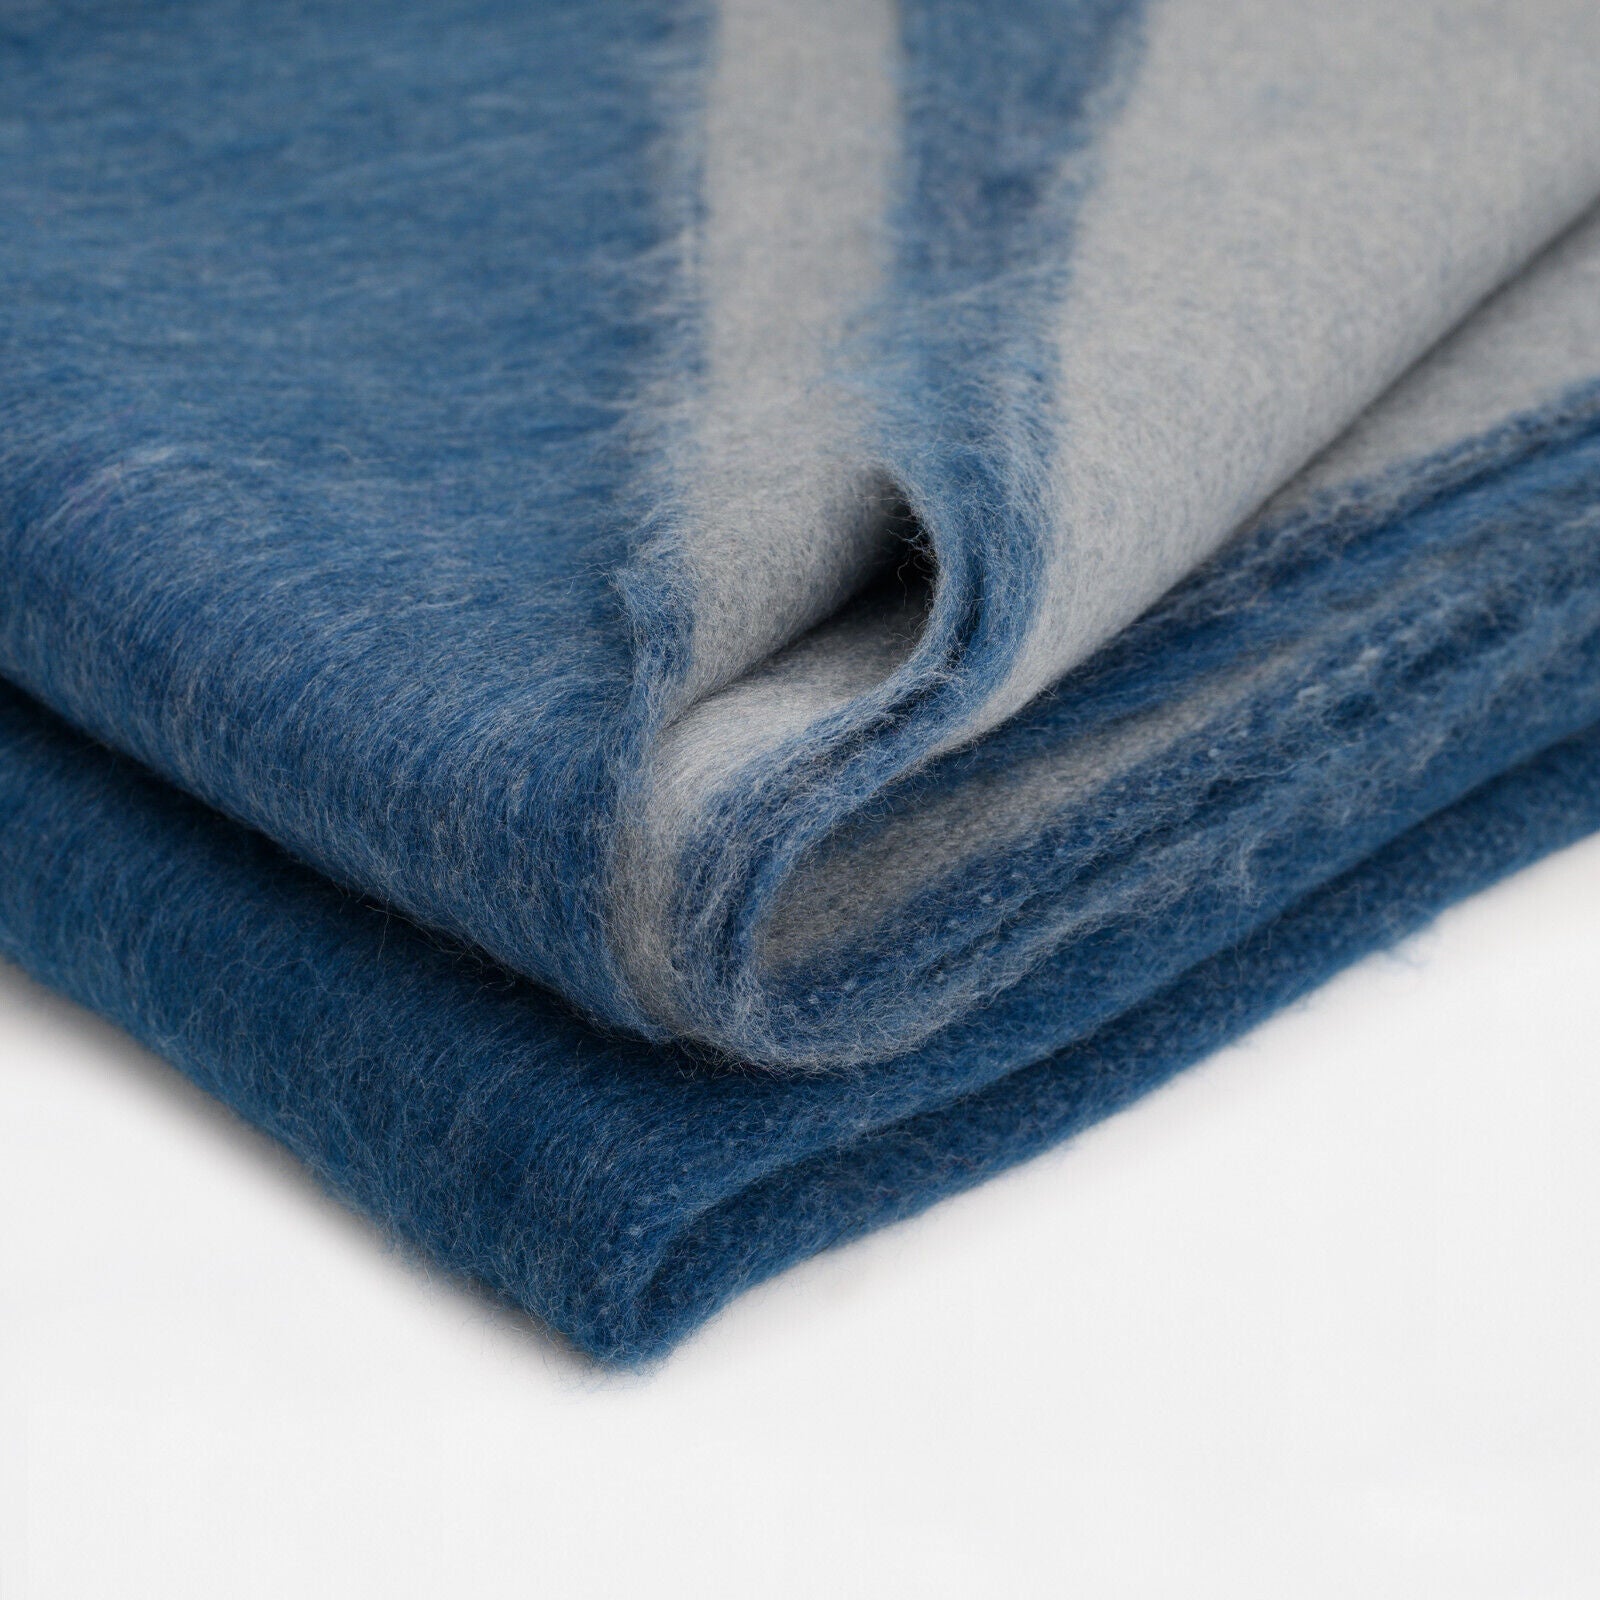 Pantoja - Baby Alpaca Wool Reversible Throw Blanket / Sofa Cover - Queen 98" x 67" - Fringed - Deep Blue/Gray